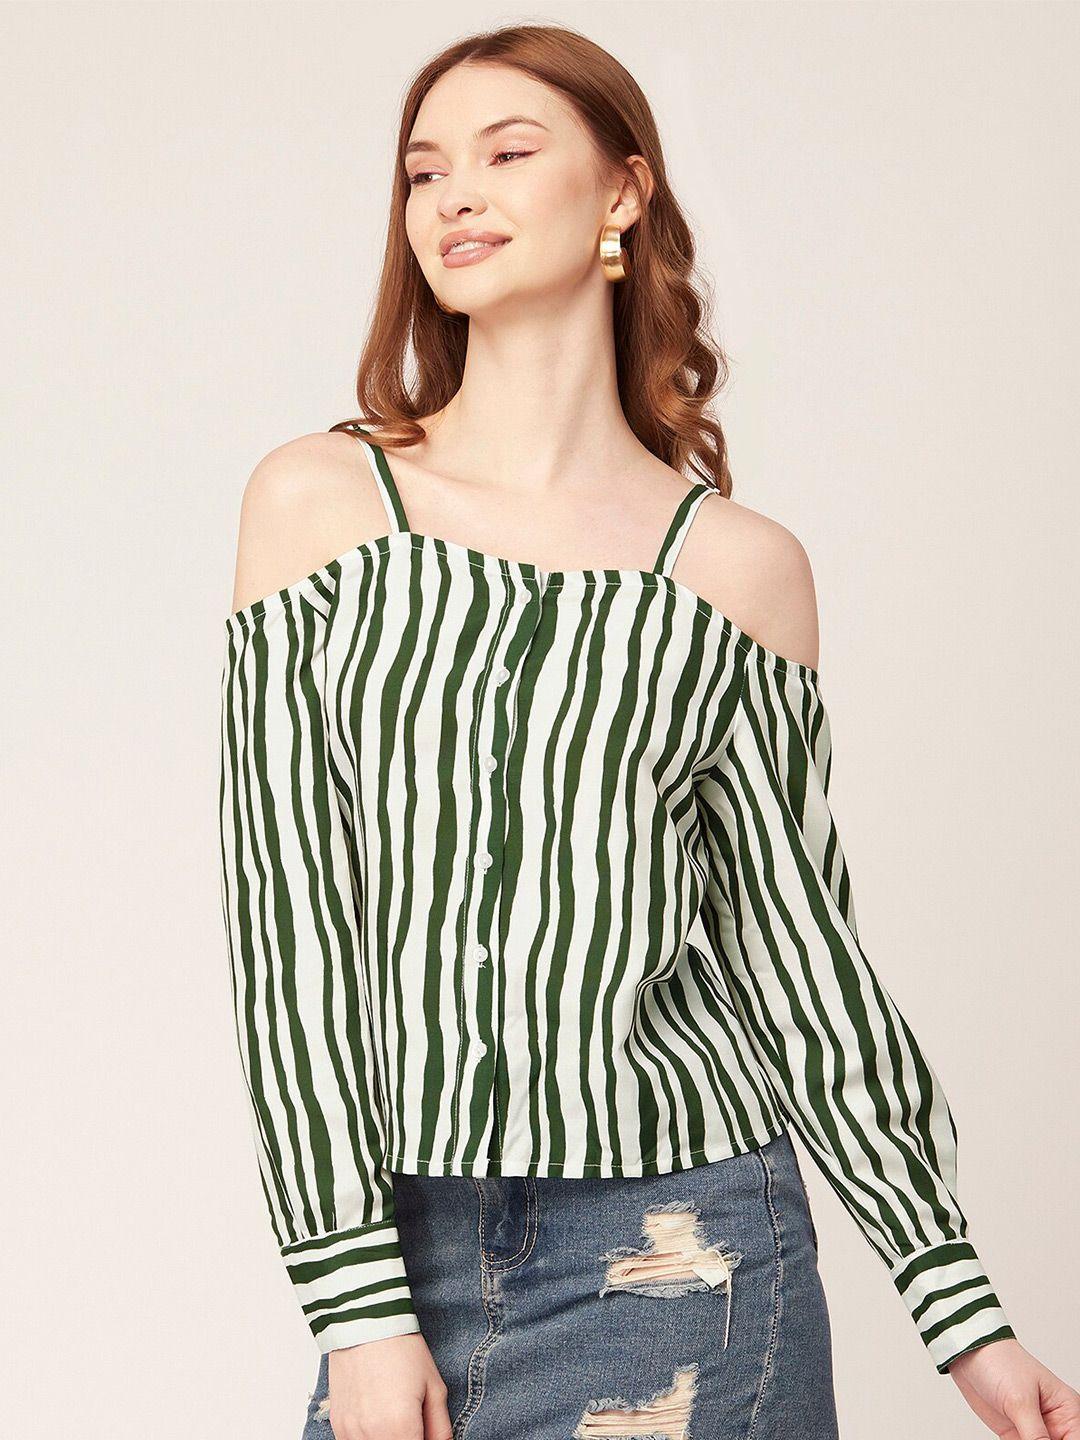 moomaya green striped top